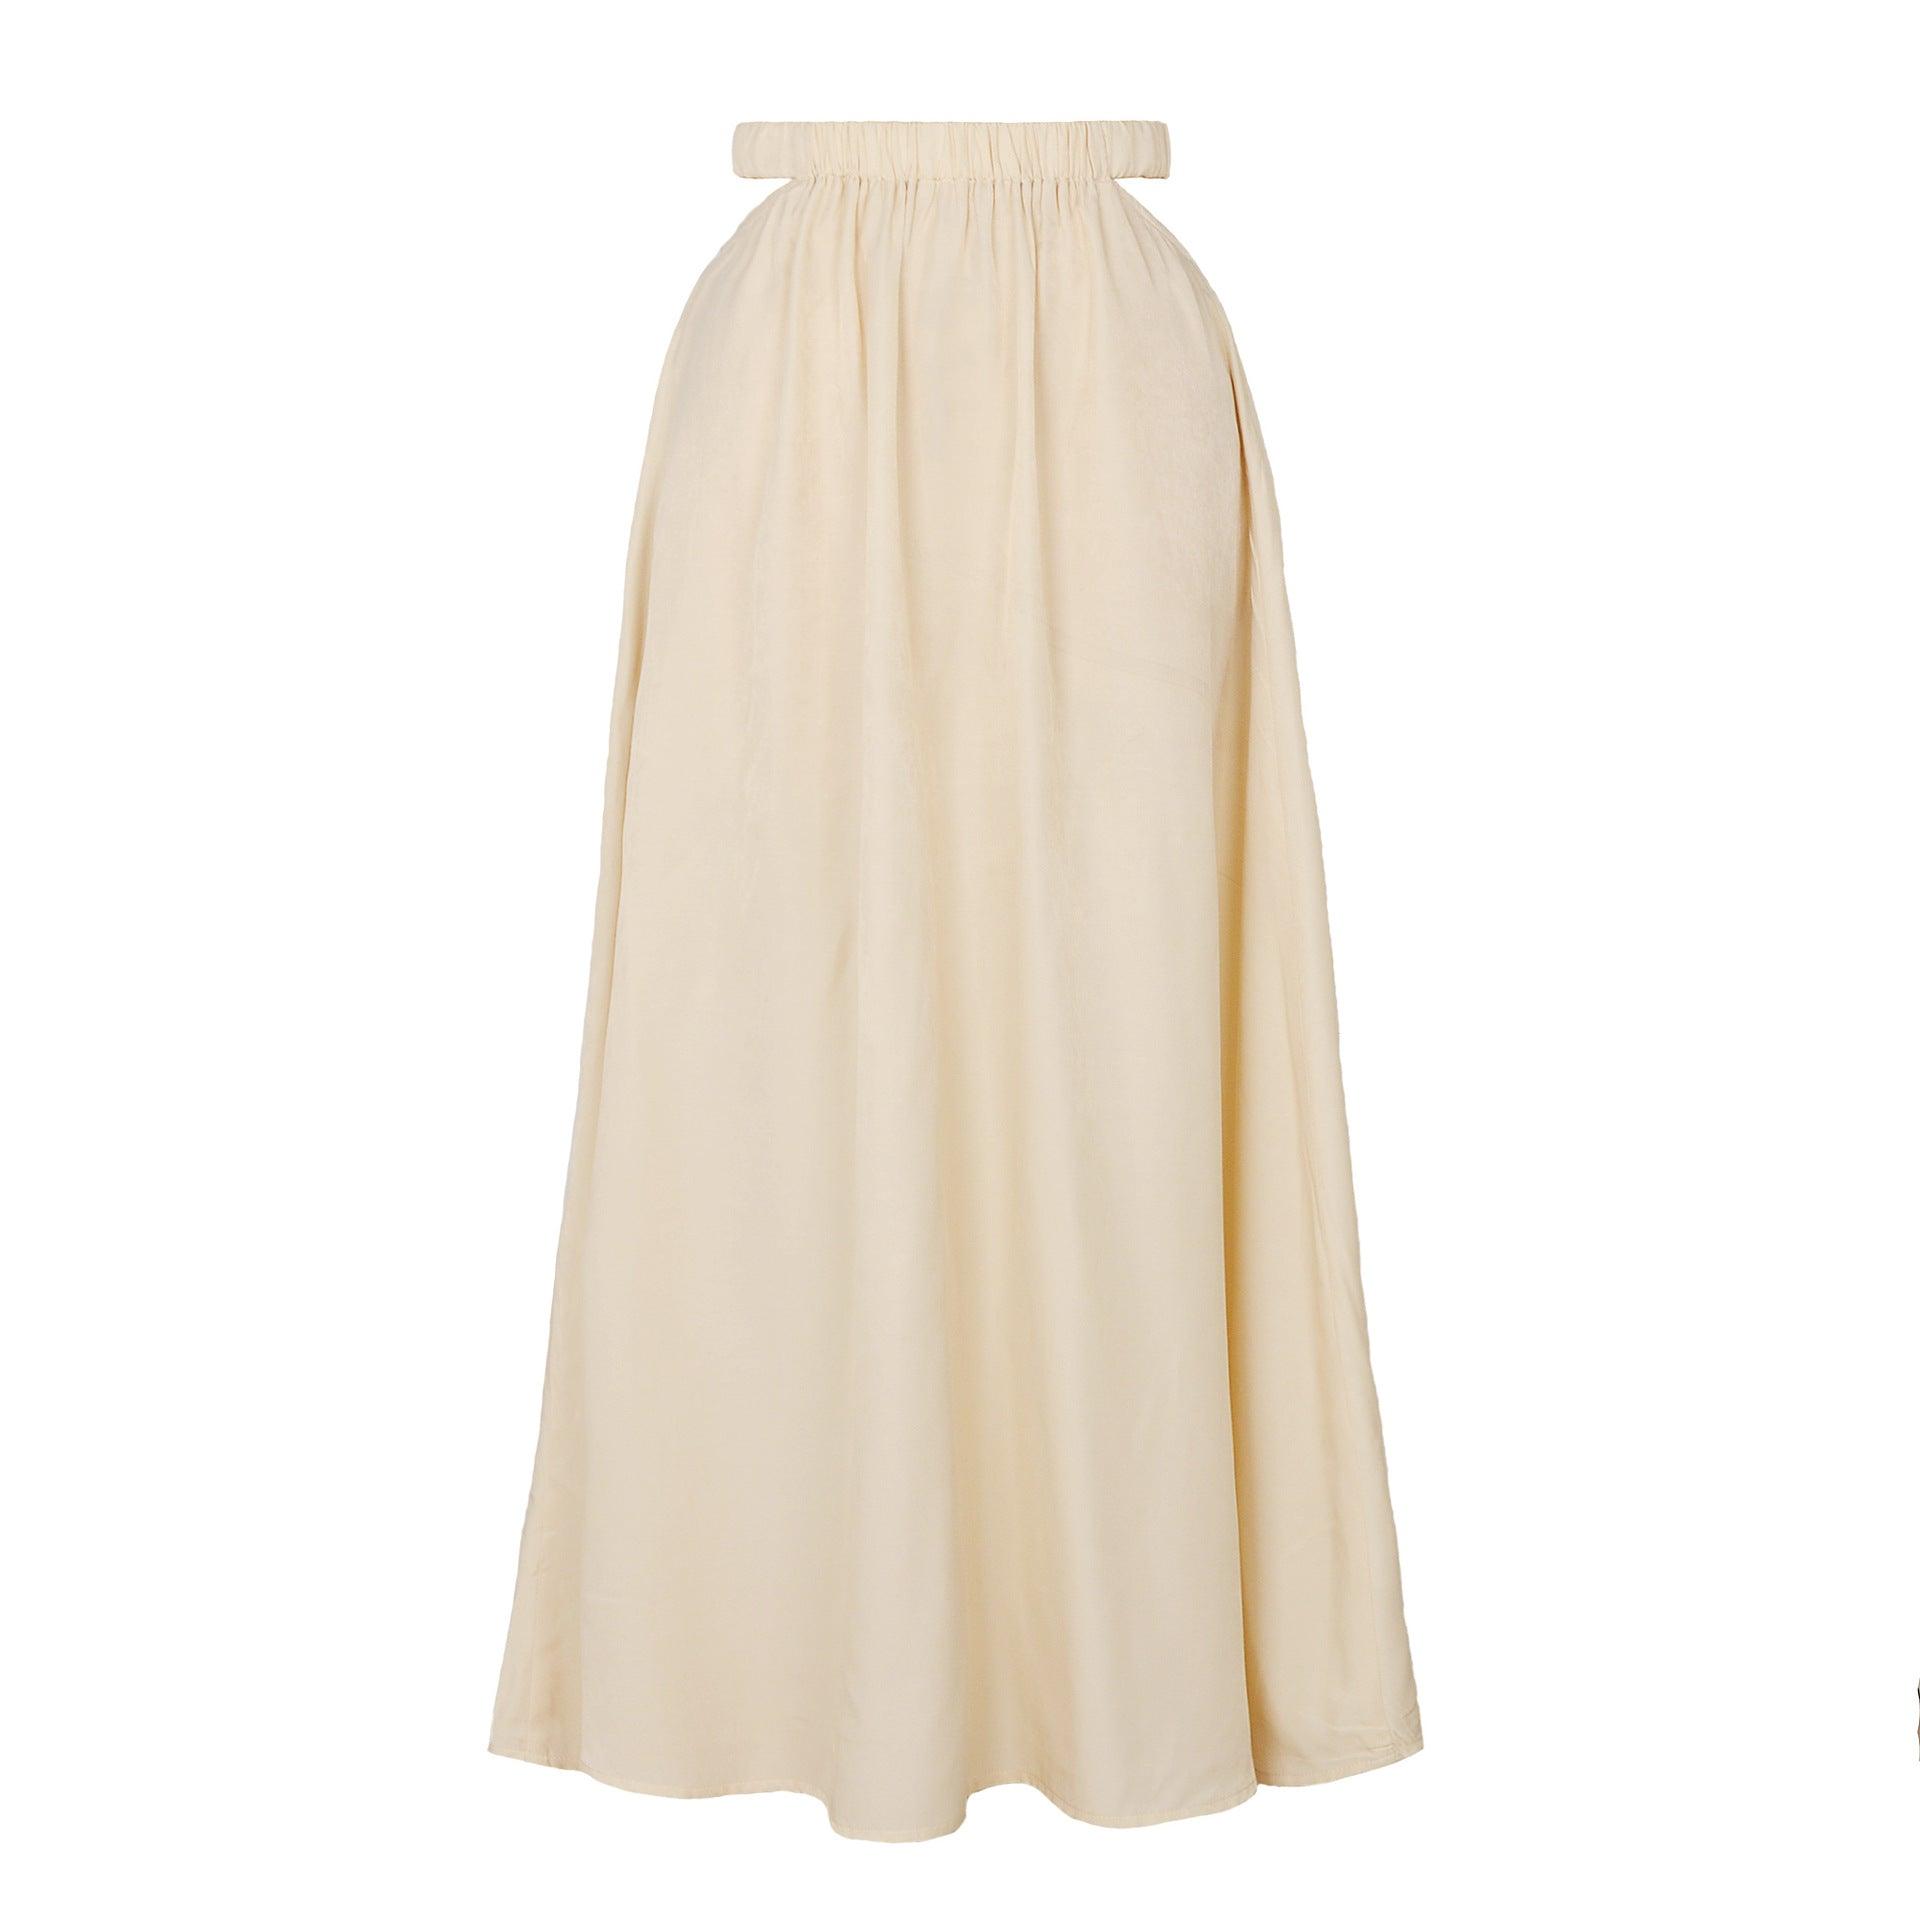 Elegant High-Waist Long Skirt for Women – Hollow Design with Subtle Stretch - Glinyt